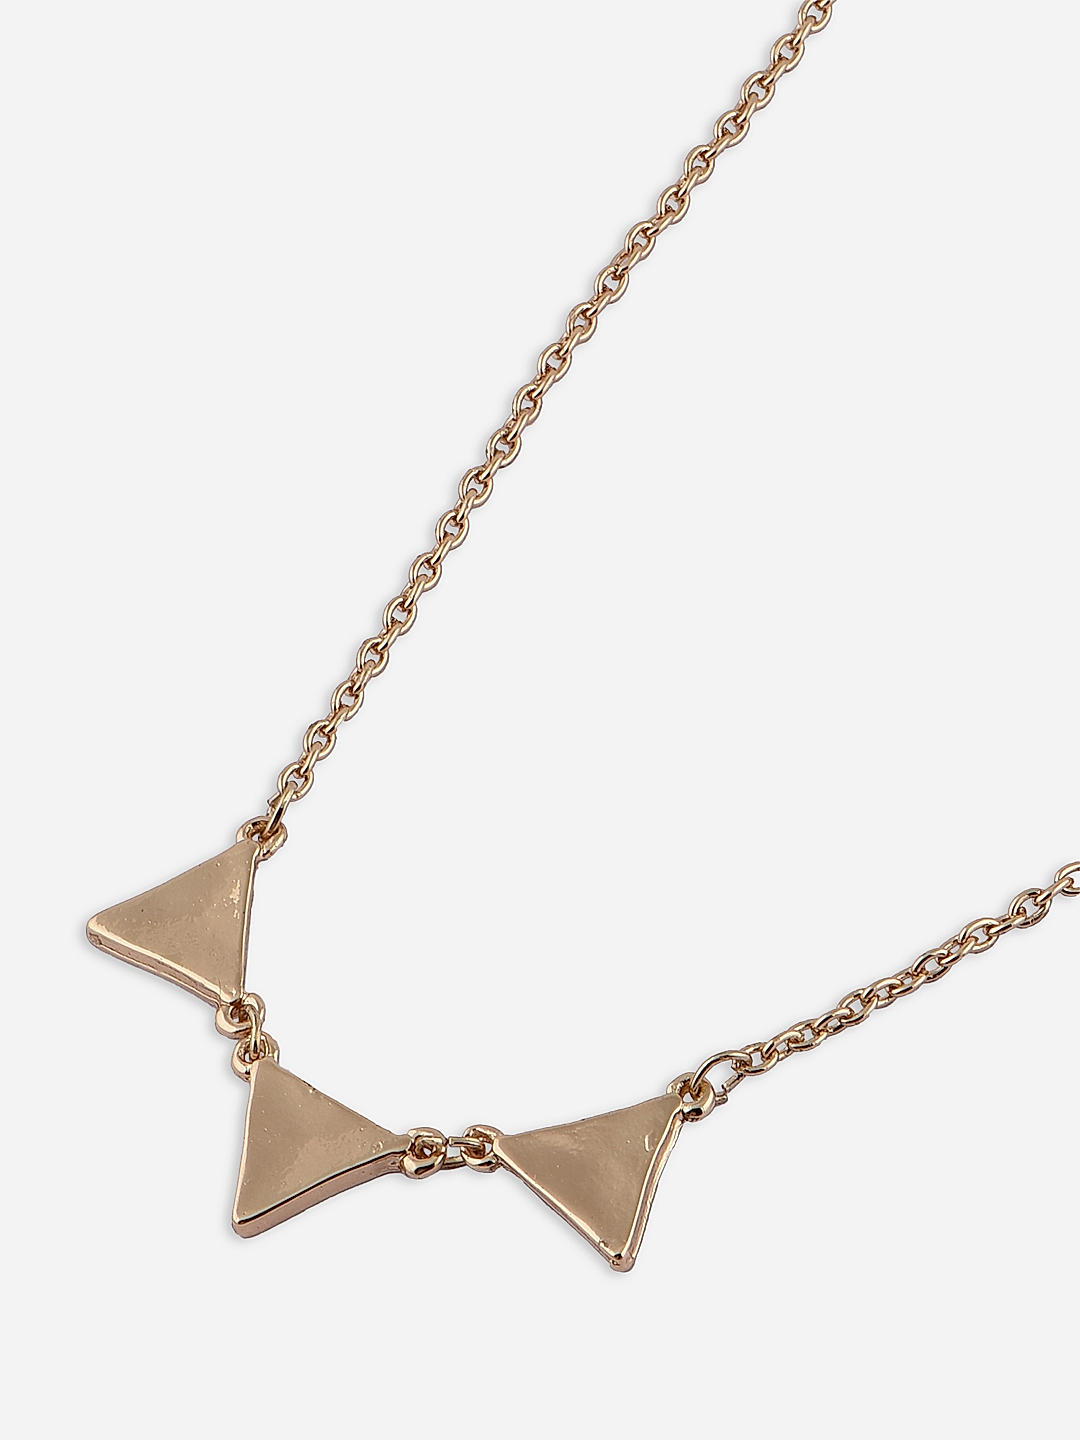 Elva Necklace - Gold - White Diamond | Stephanie Ellis Jewelry